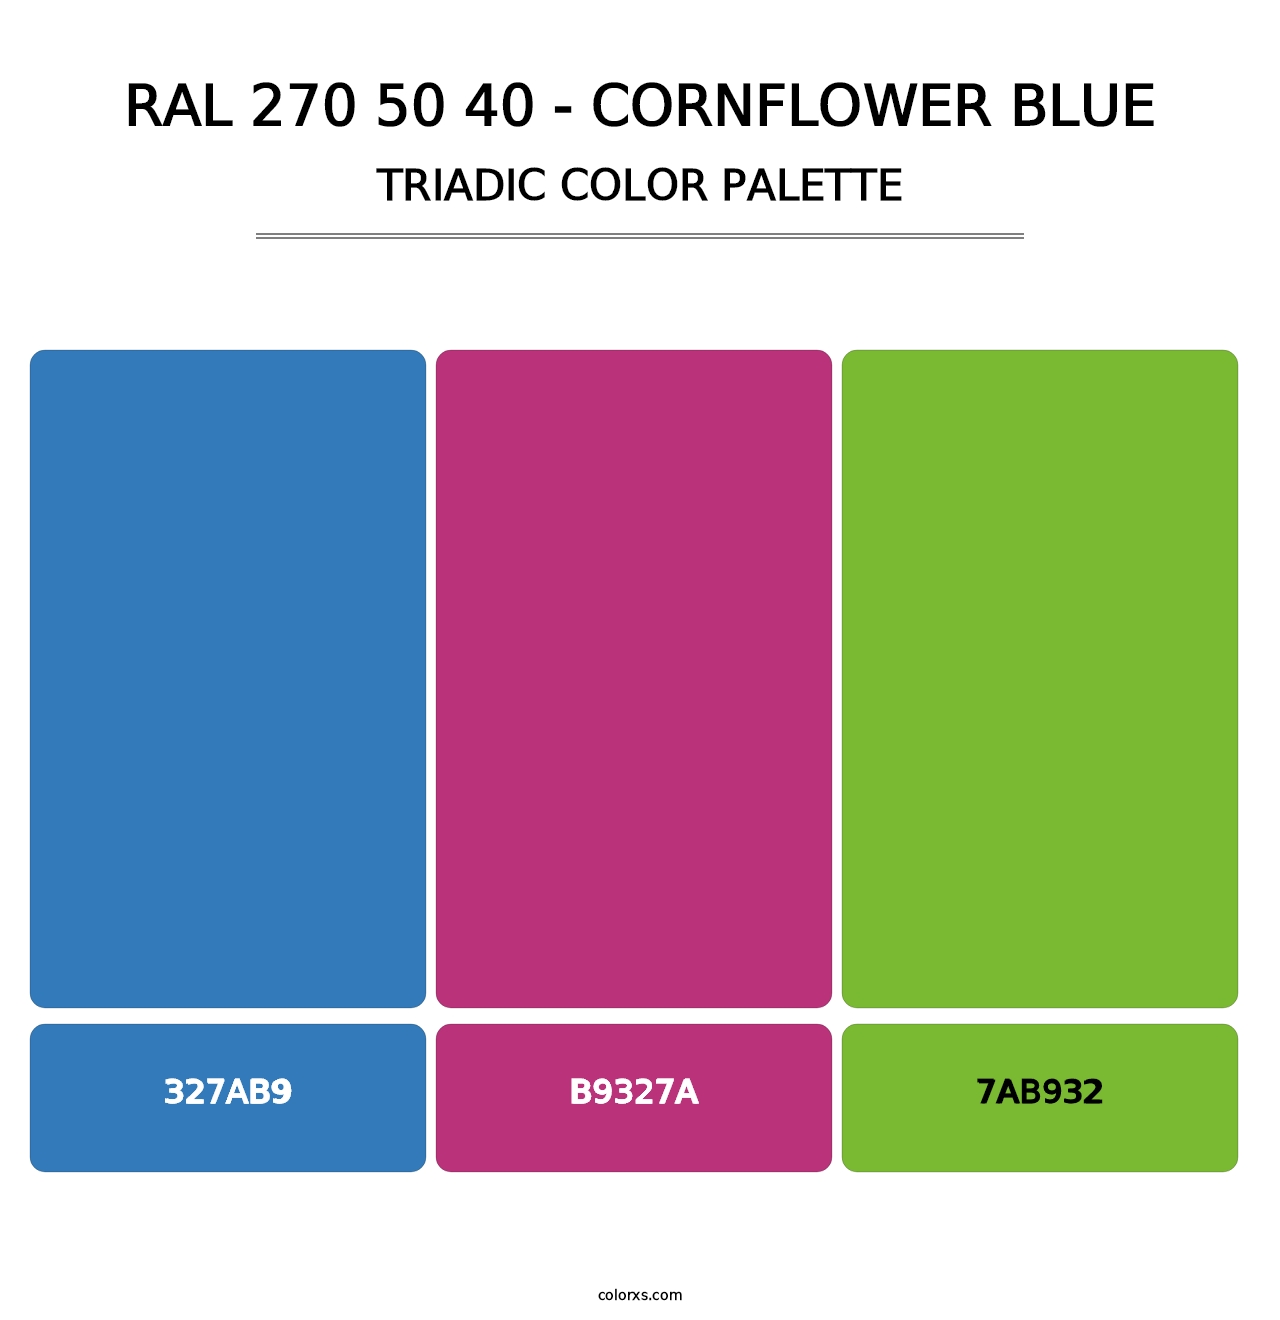 RAL 270 50 40 - Cornflower Blue - Triadic Color Palette